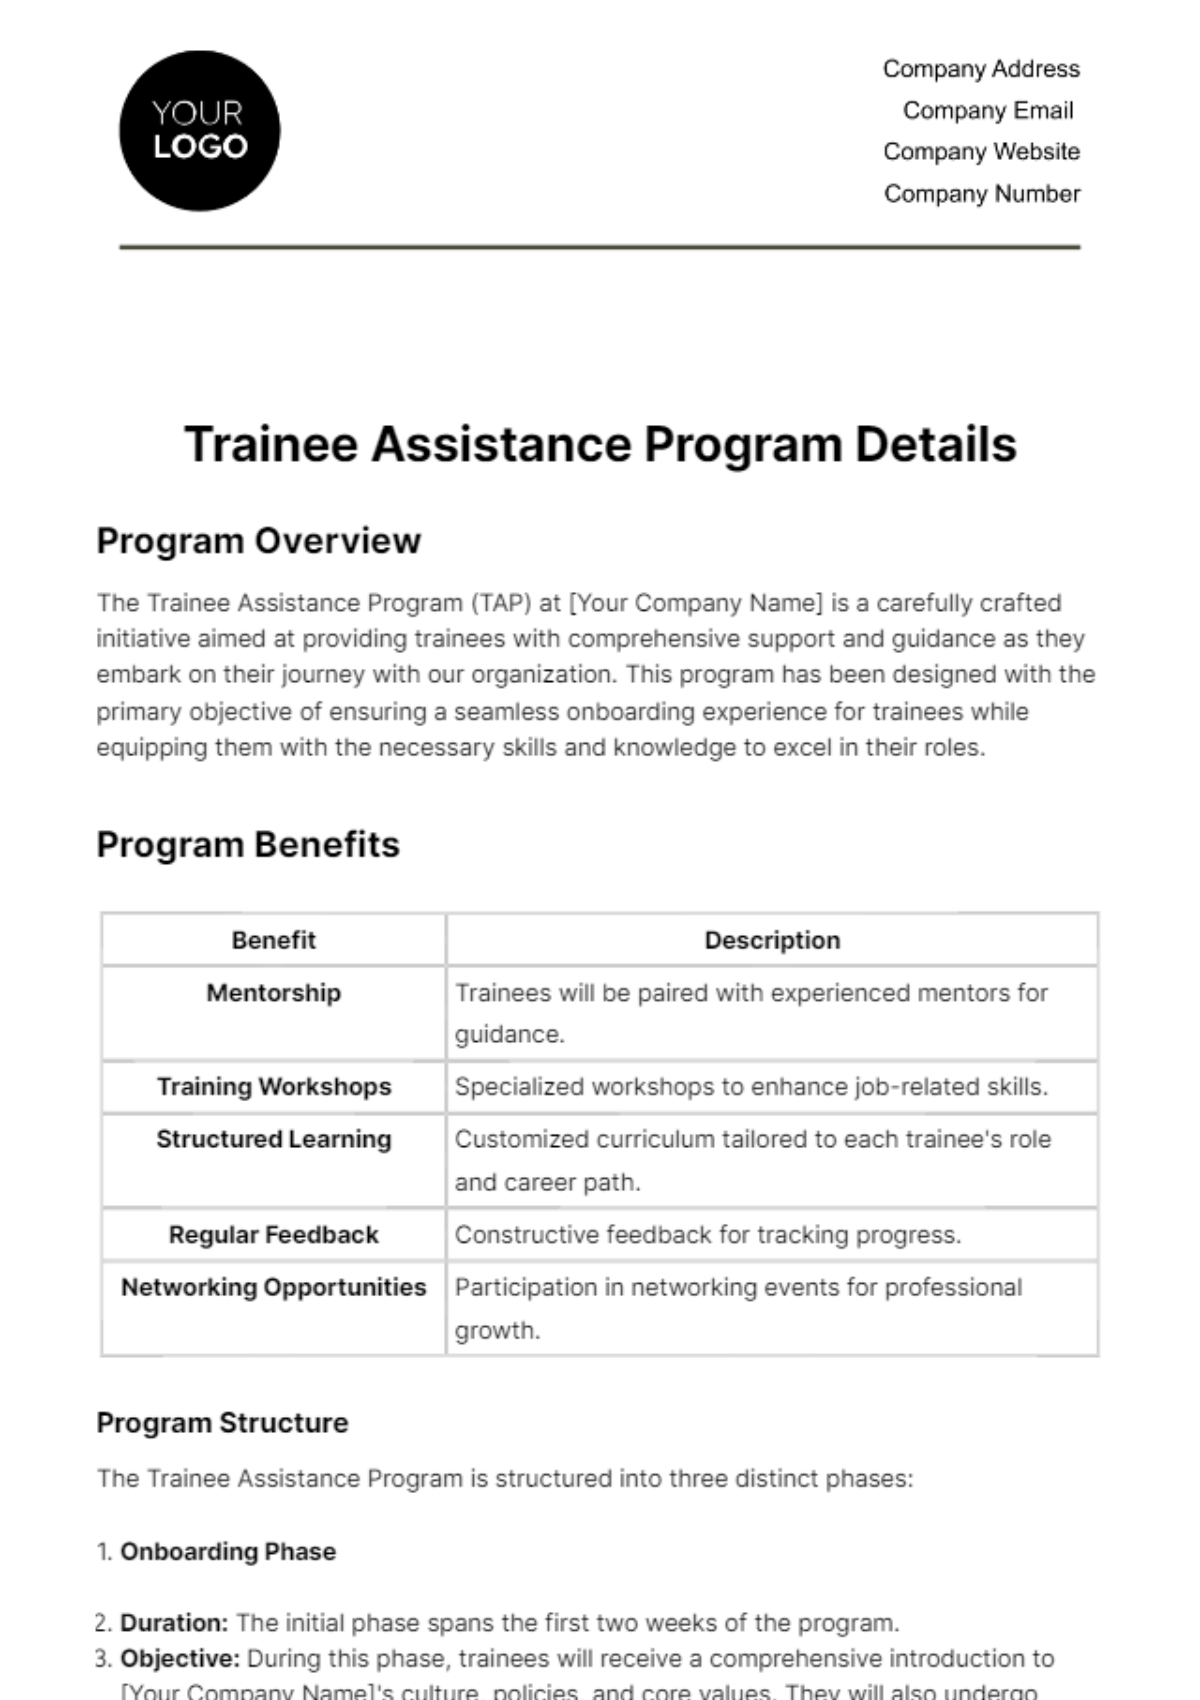 Free Trainee Assistance Program Details HR Template